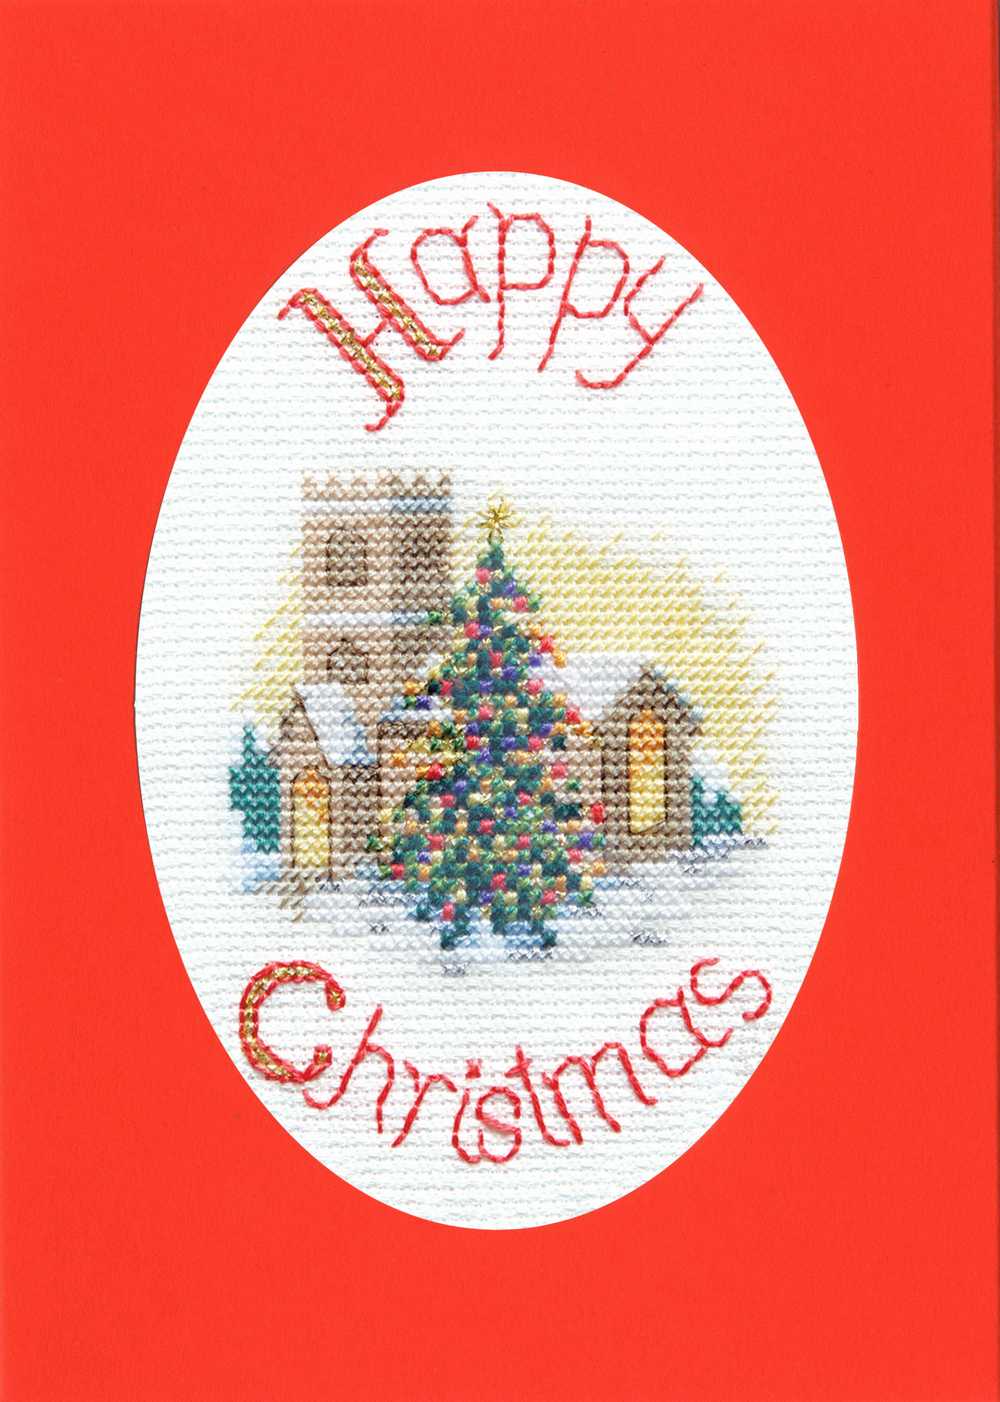 Christmas Card - Midnight Mass Cross Stitch Kit by Derwentwater